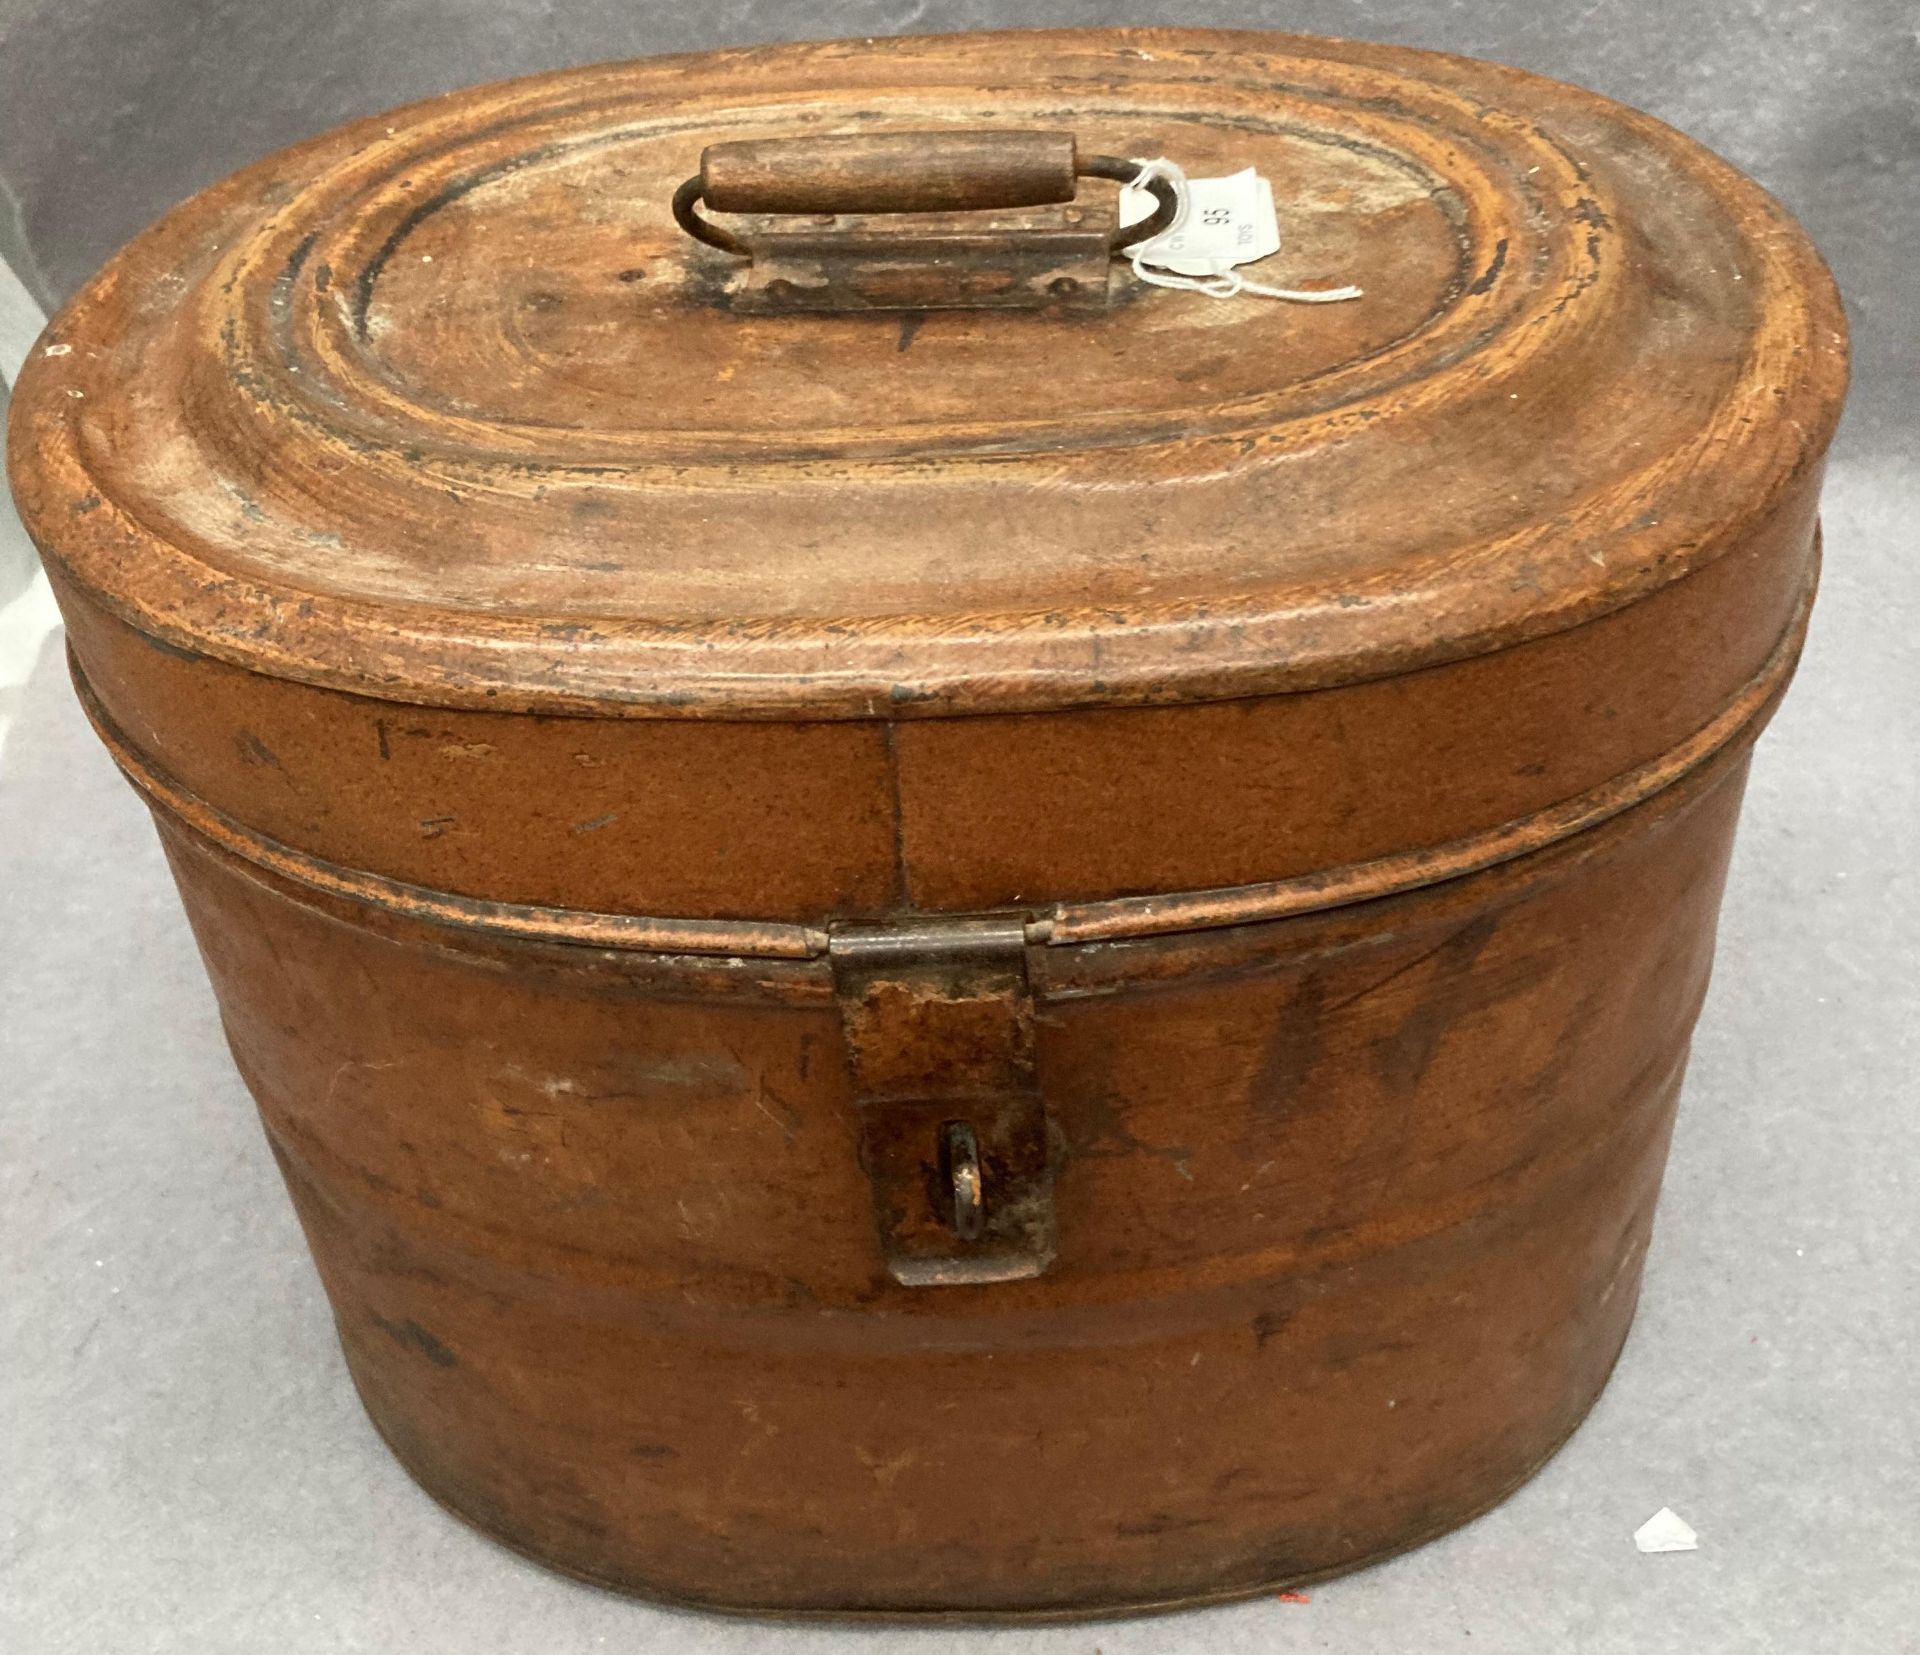 A brown metal top hat box